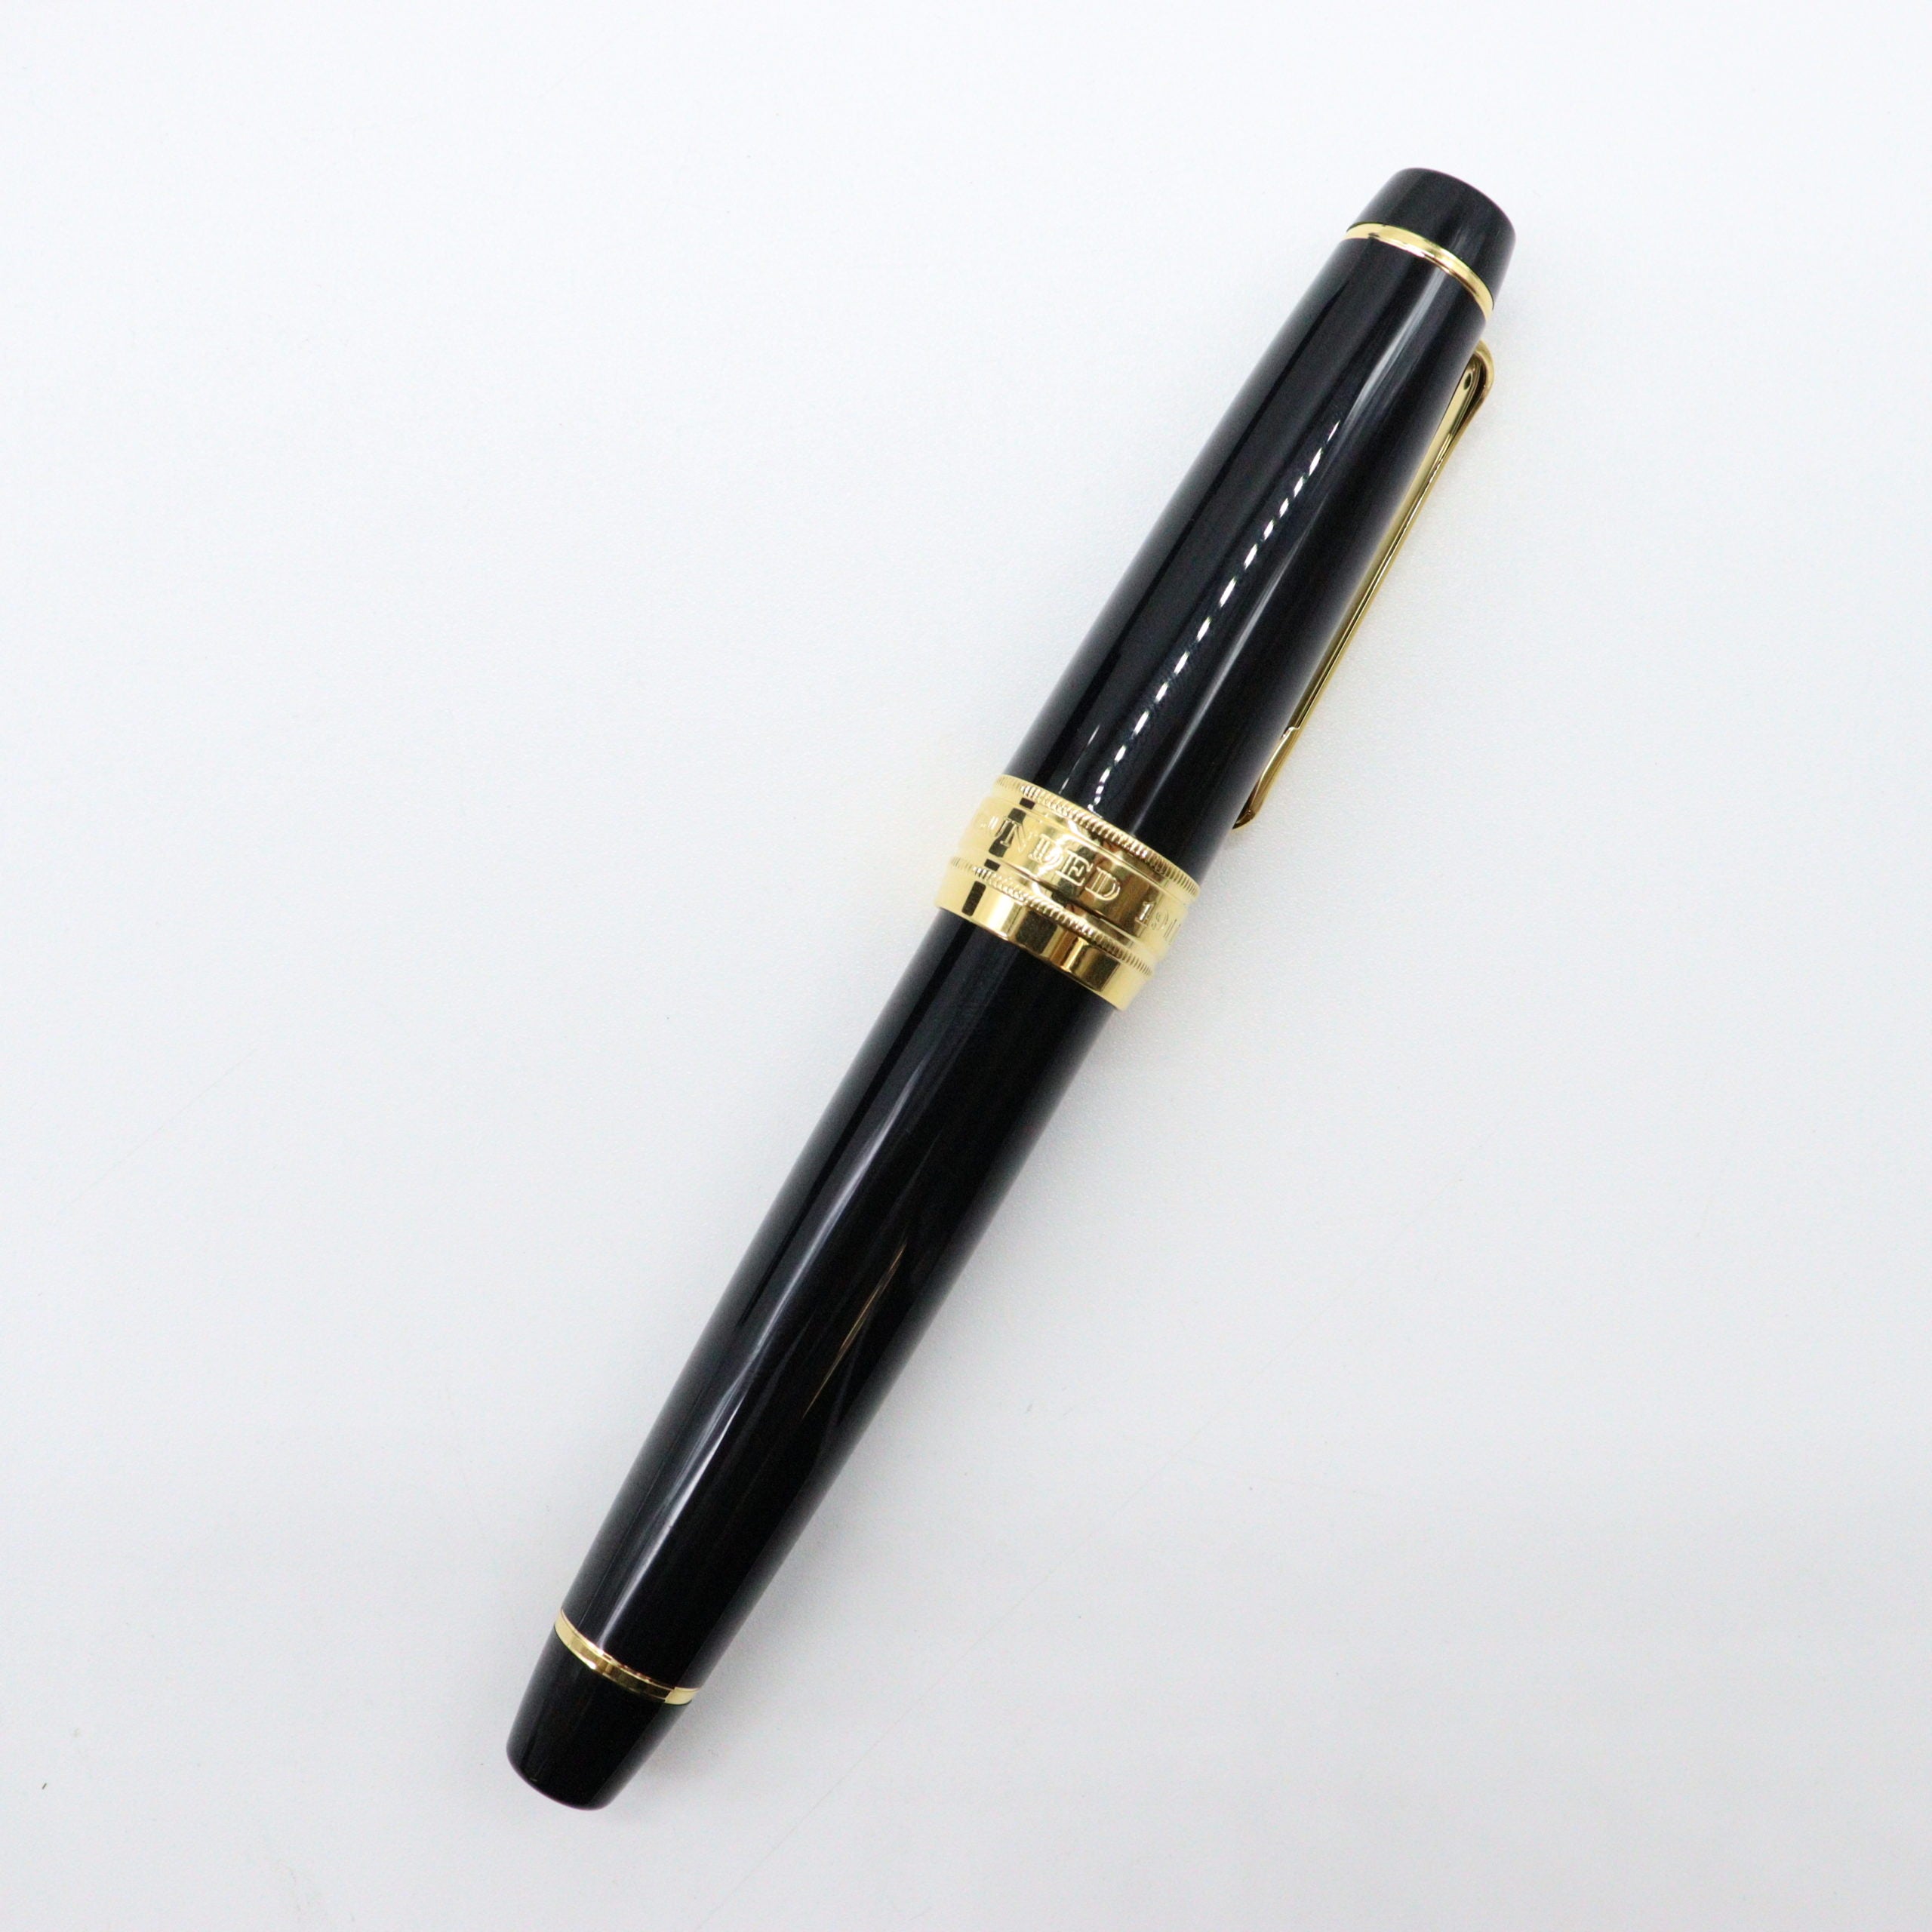 SAILOR PEN - 21K Gold - Pro Gear King of Pen Fountain Pen - Black and Gold